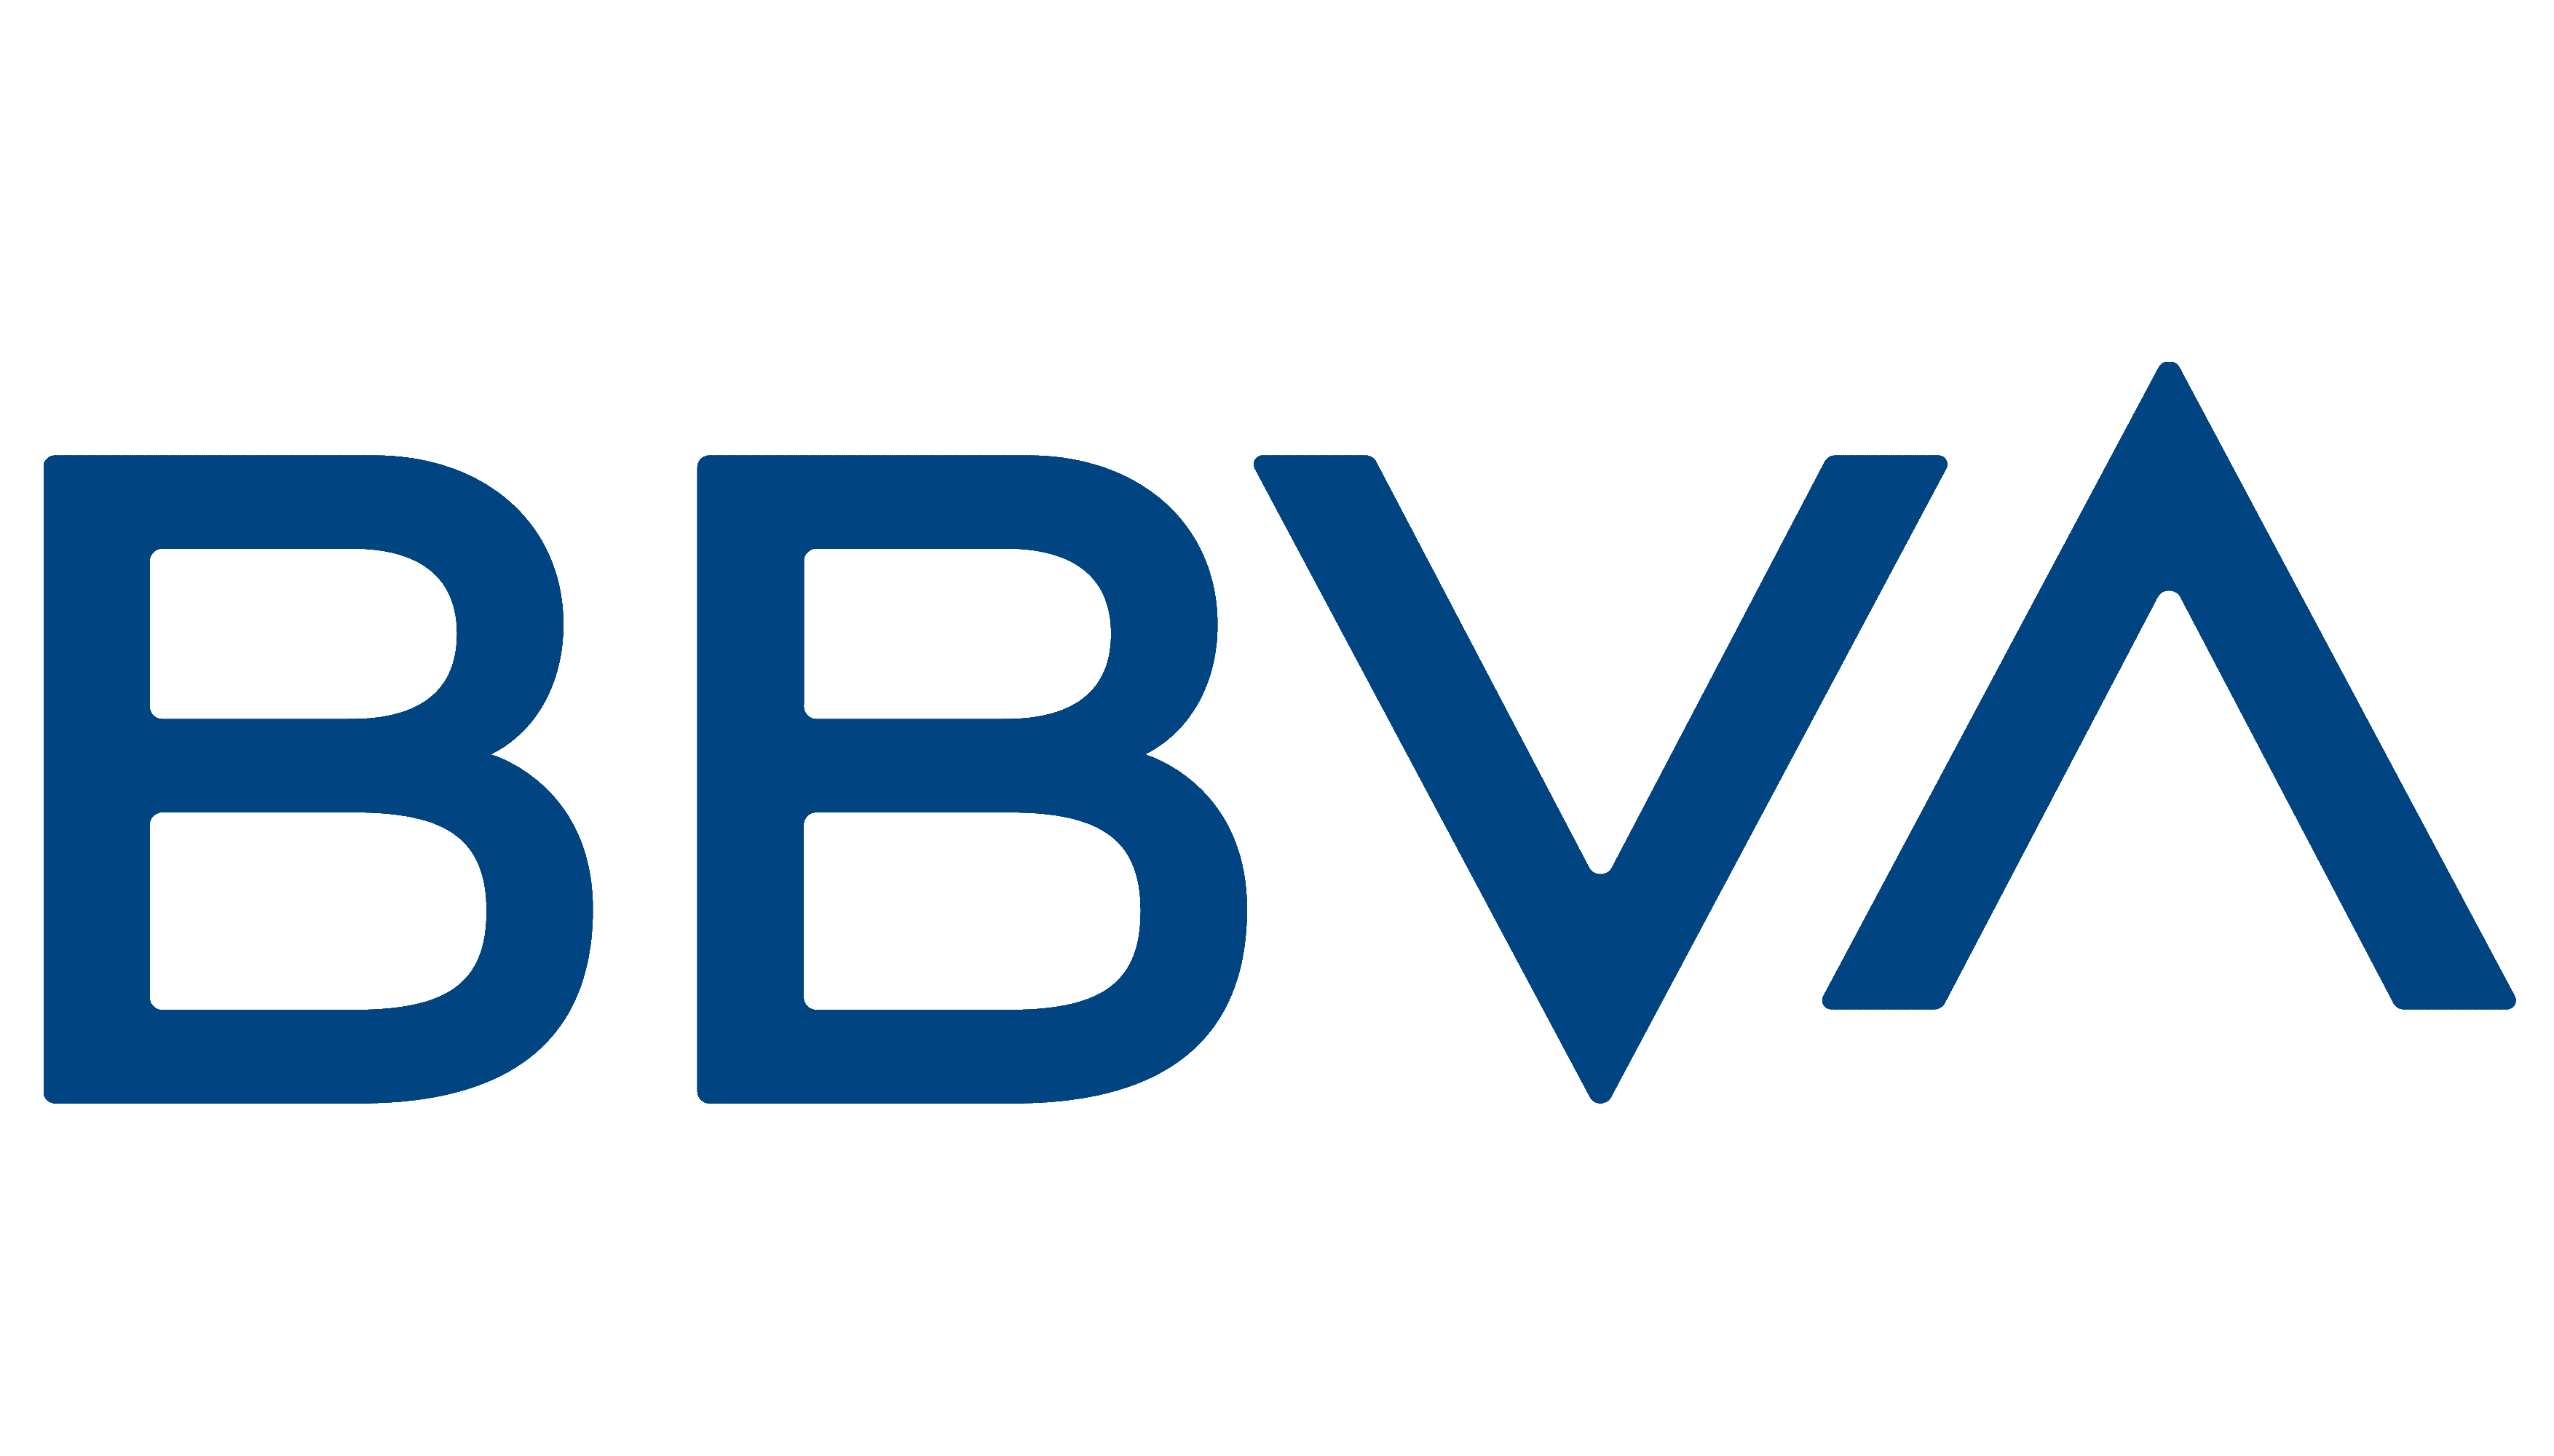 BBVA-logo